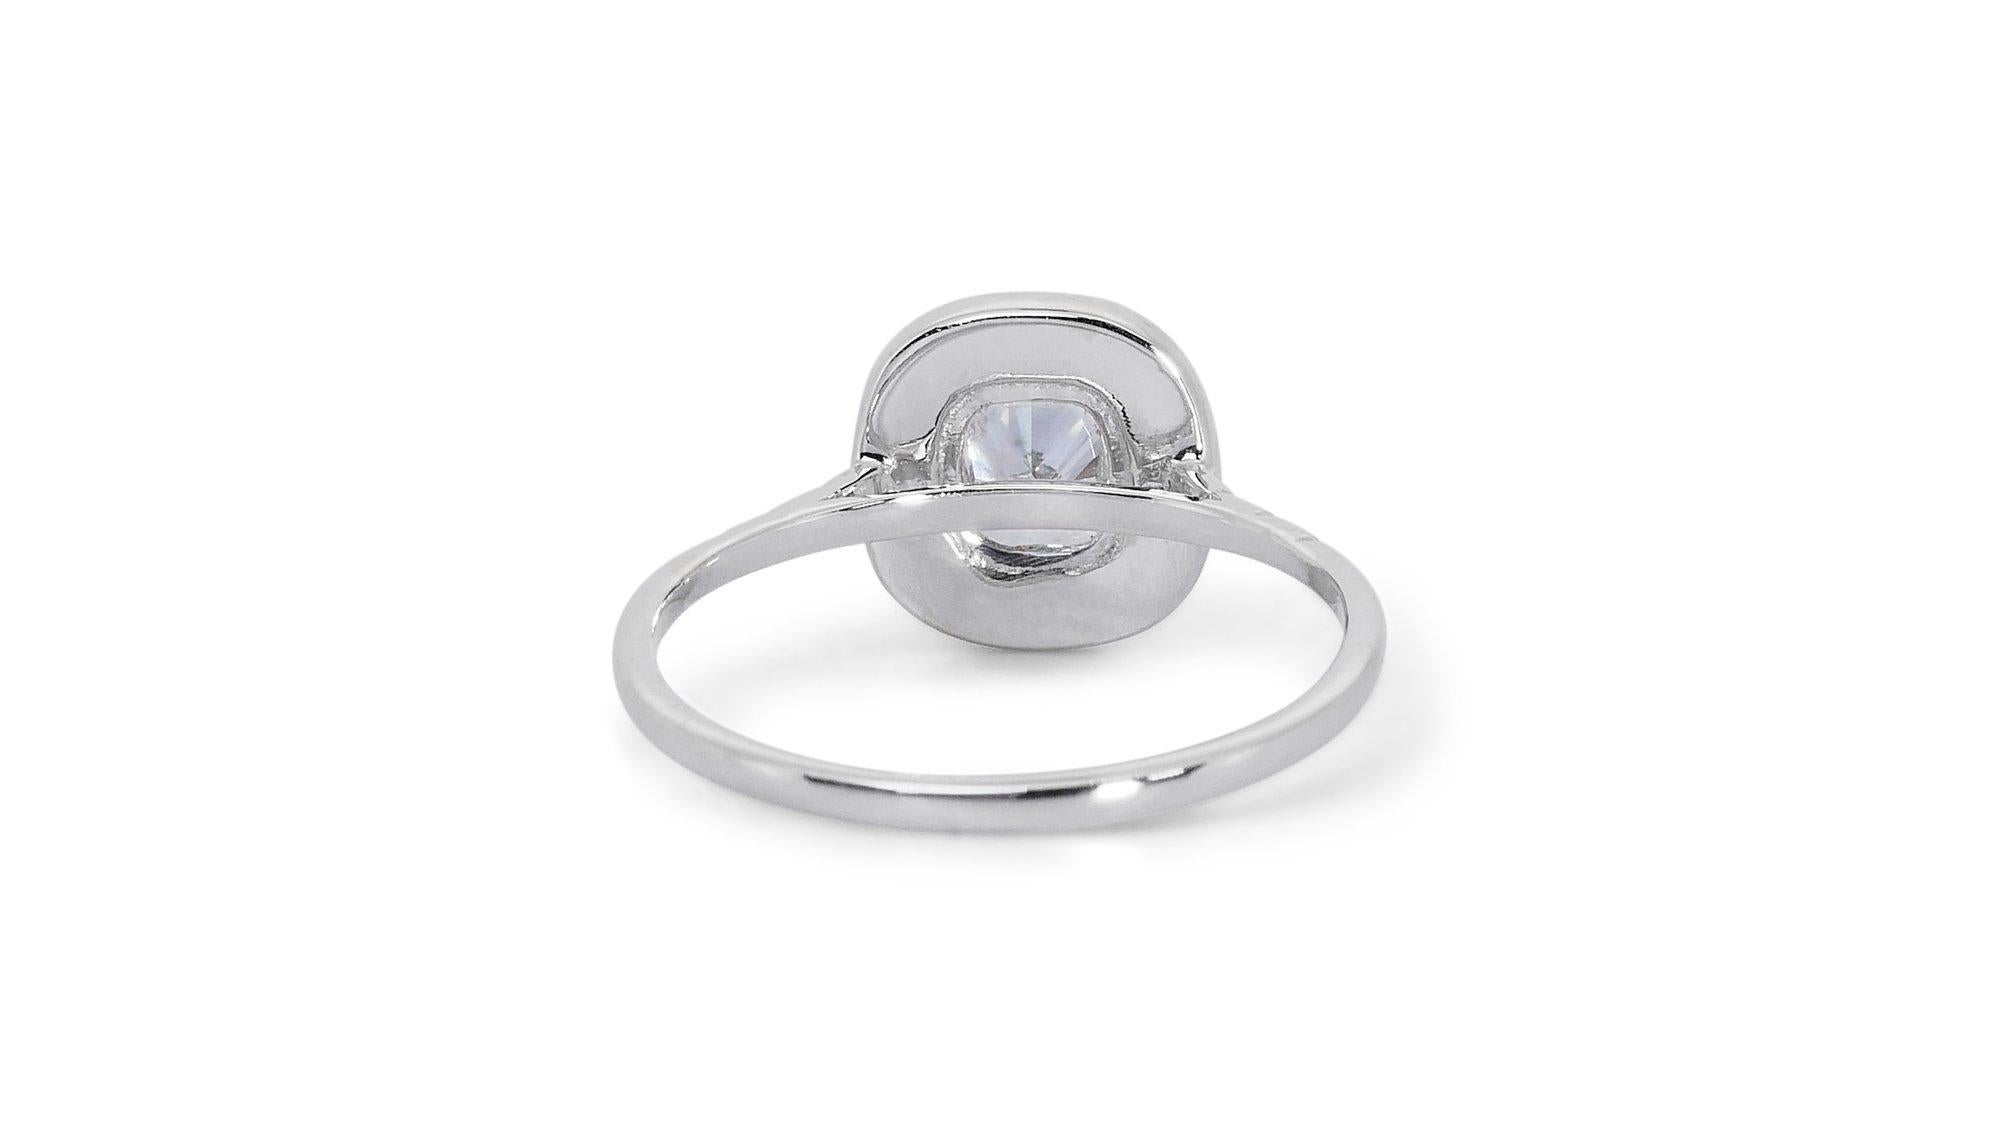 Elegant 1.17ct Diamonds Halo Ring in 18k White Gold - GIA Certified For Sale 2